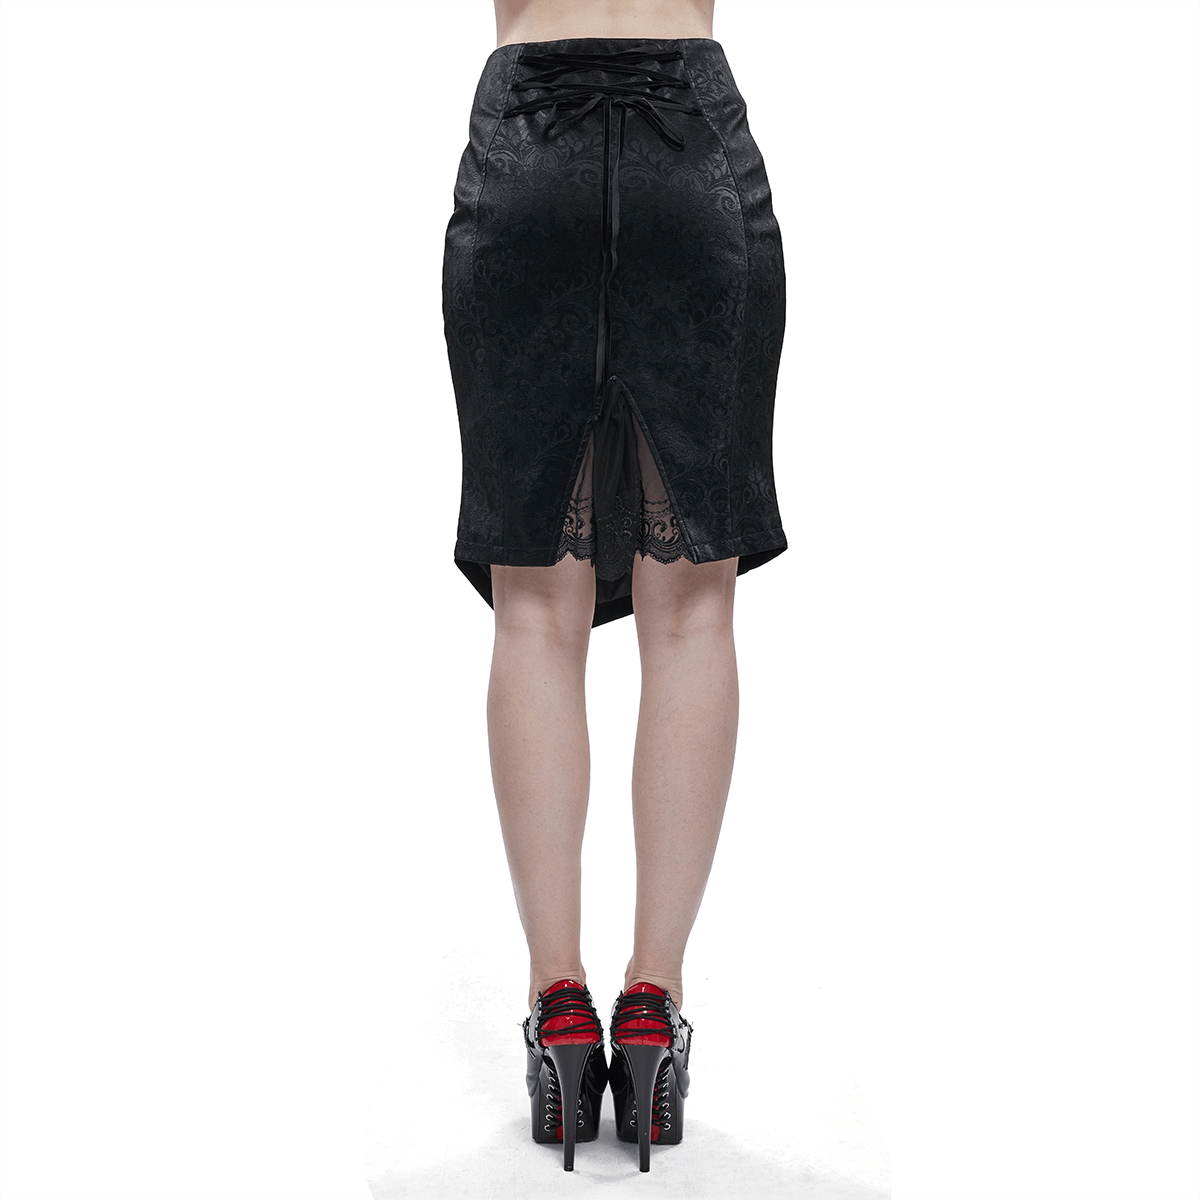 Black Elegant Irregular Short Skirt for Women / Gothic Style Slim Skirts with Lace-Up Back - HARD'N'HEAVY